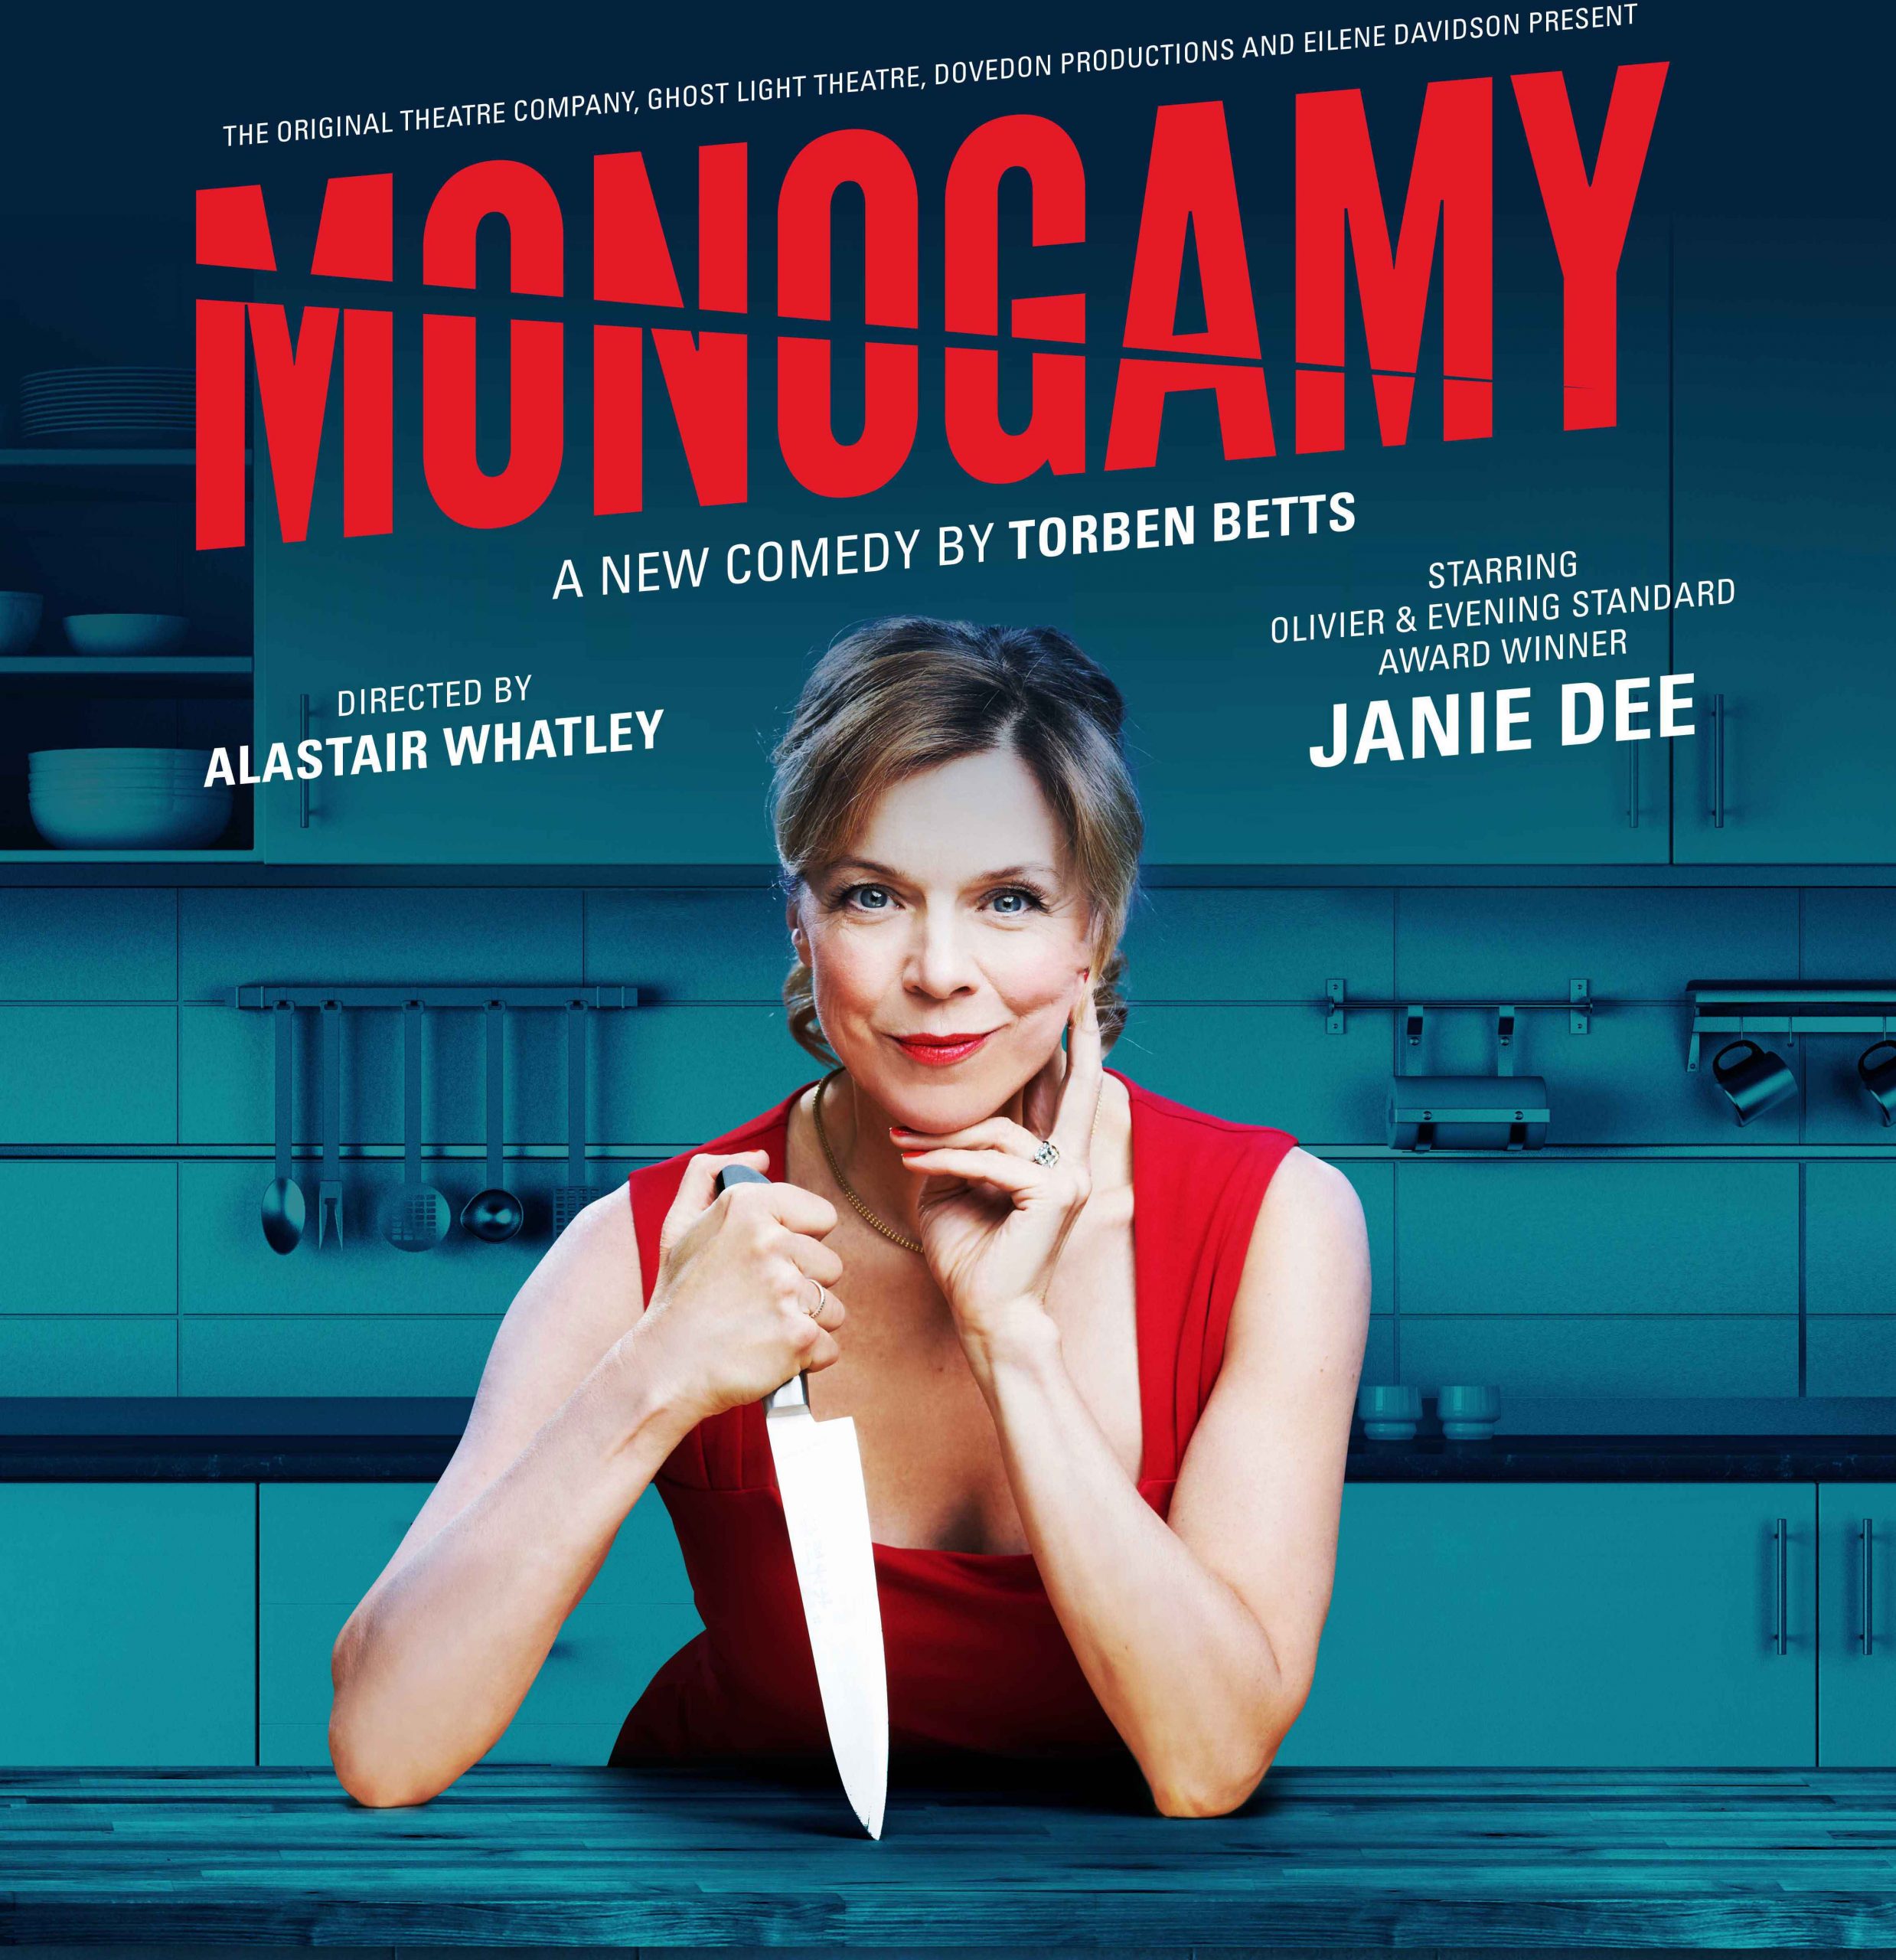 Jack Sandle in ‘Monogamy’